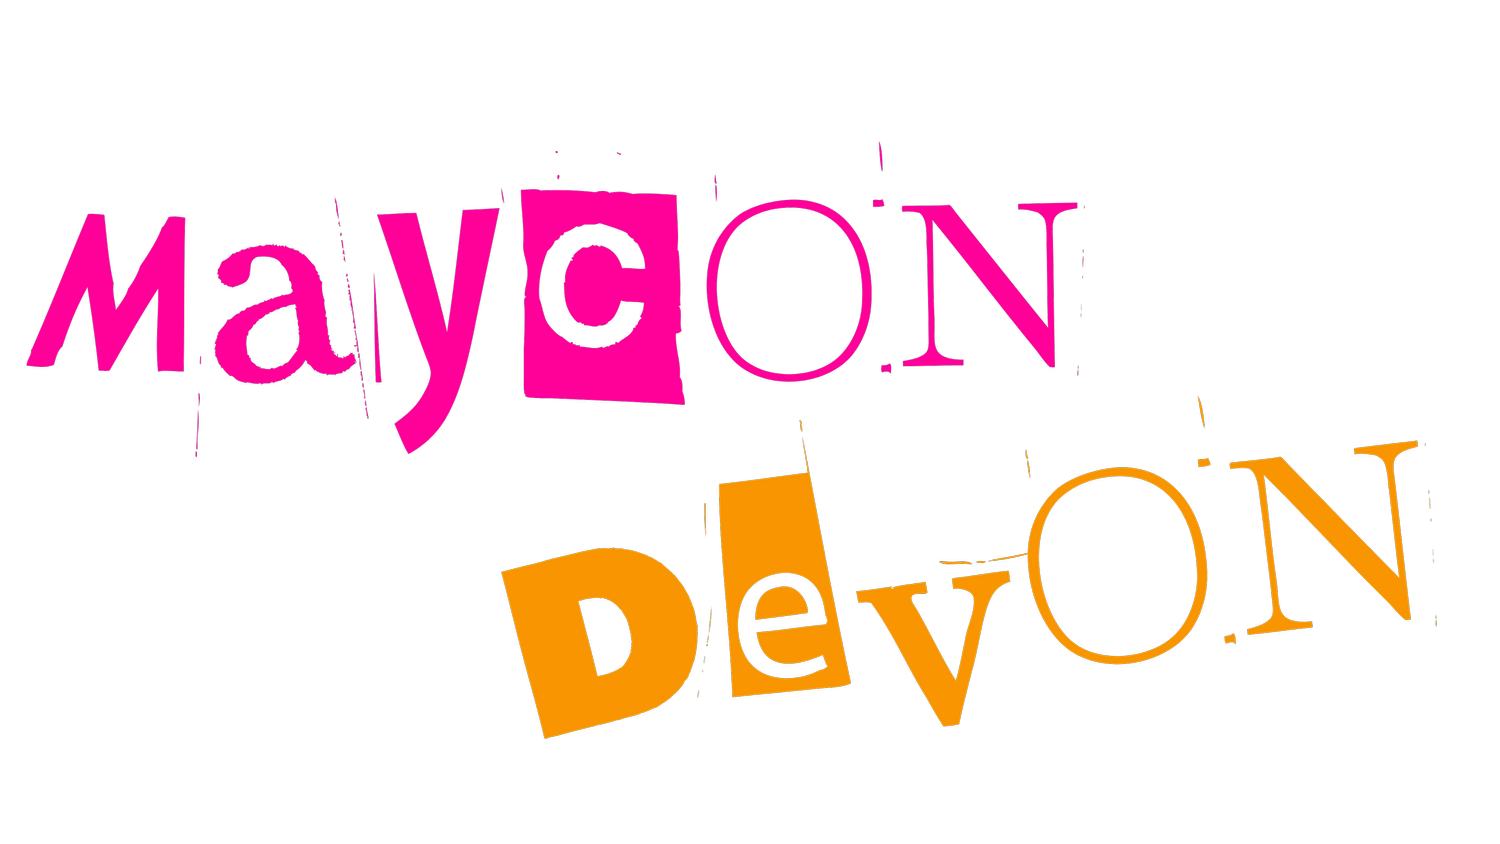 Maycon Devon